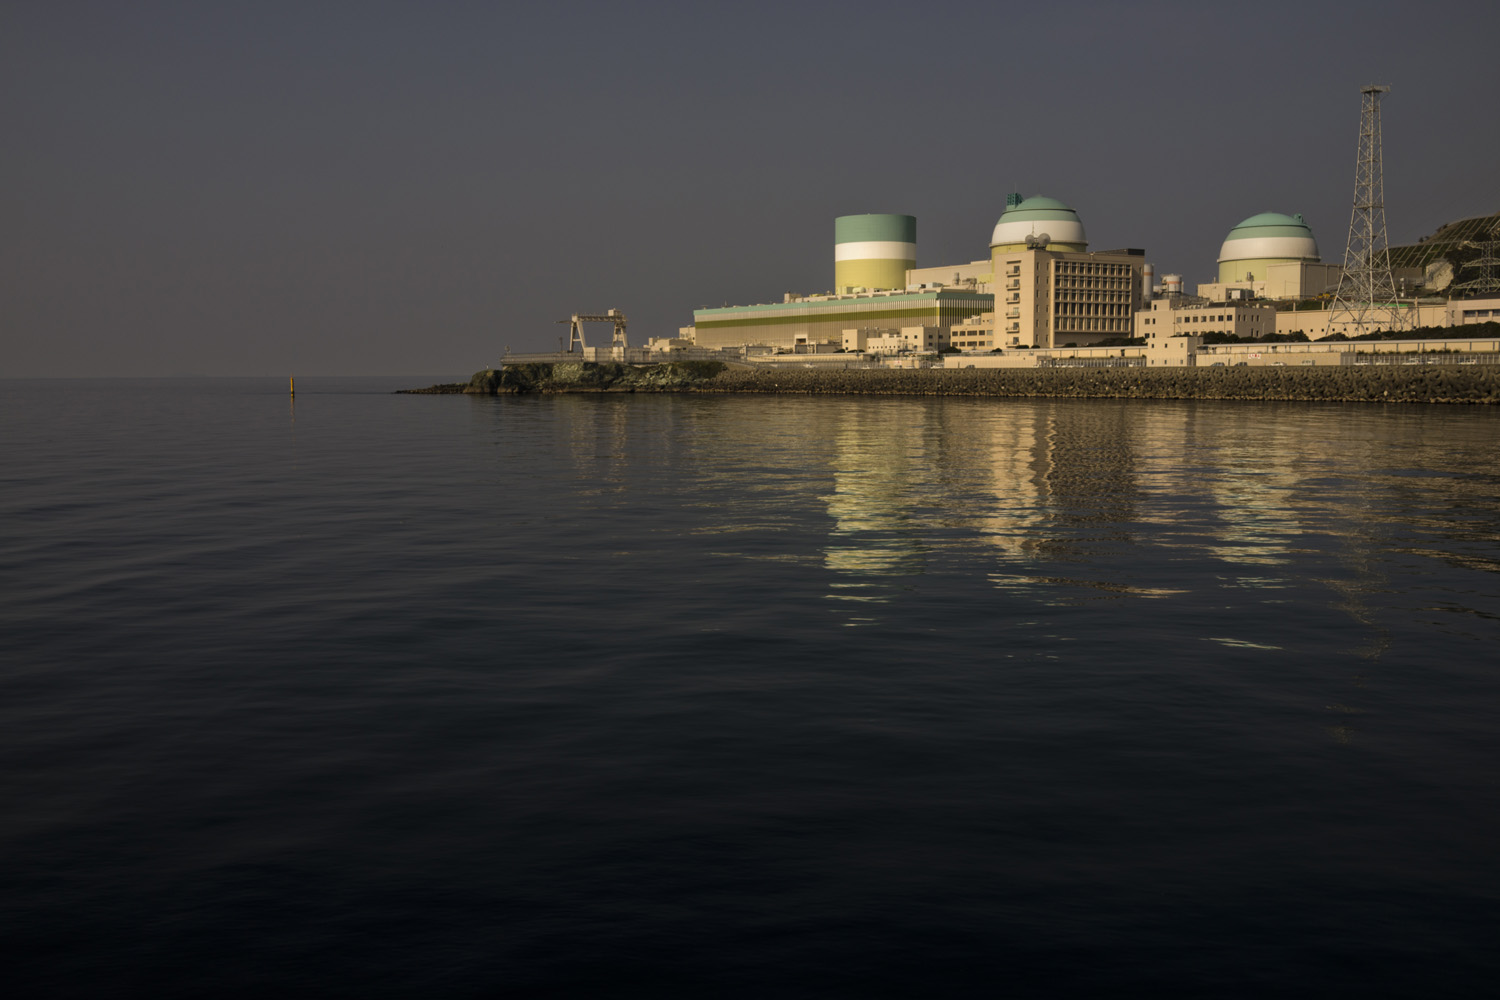 Japan, Ikata, 2014. Ikata Nuclear Power Station by Shikoku Electric Power Co., located on the southern coastline of Japan.